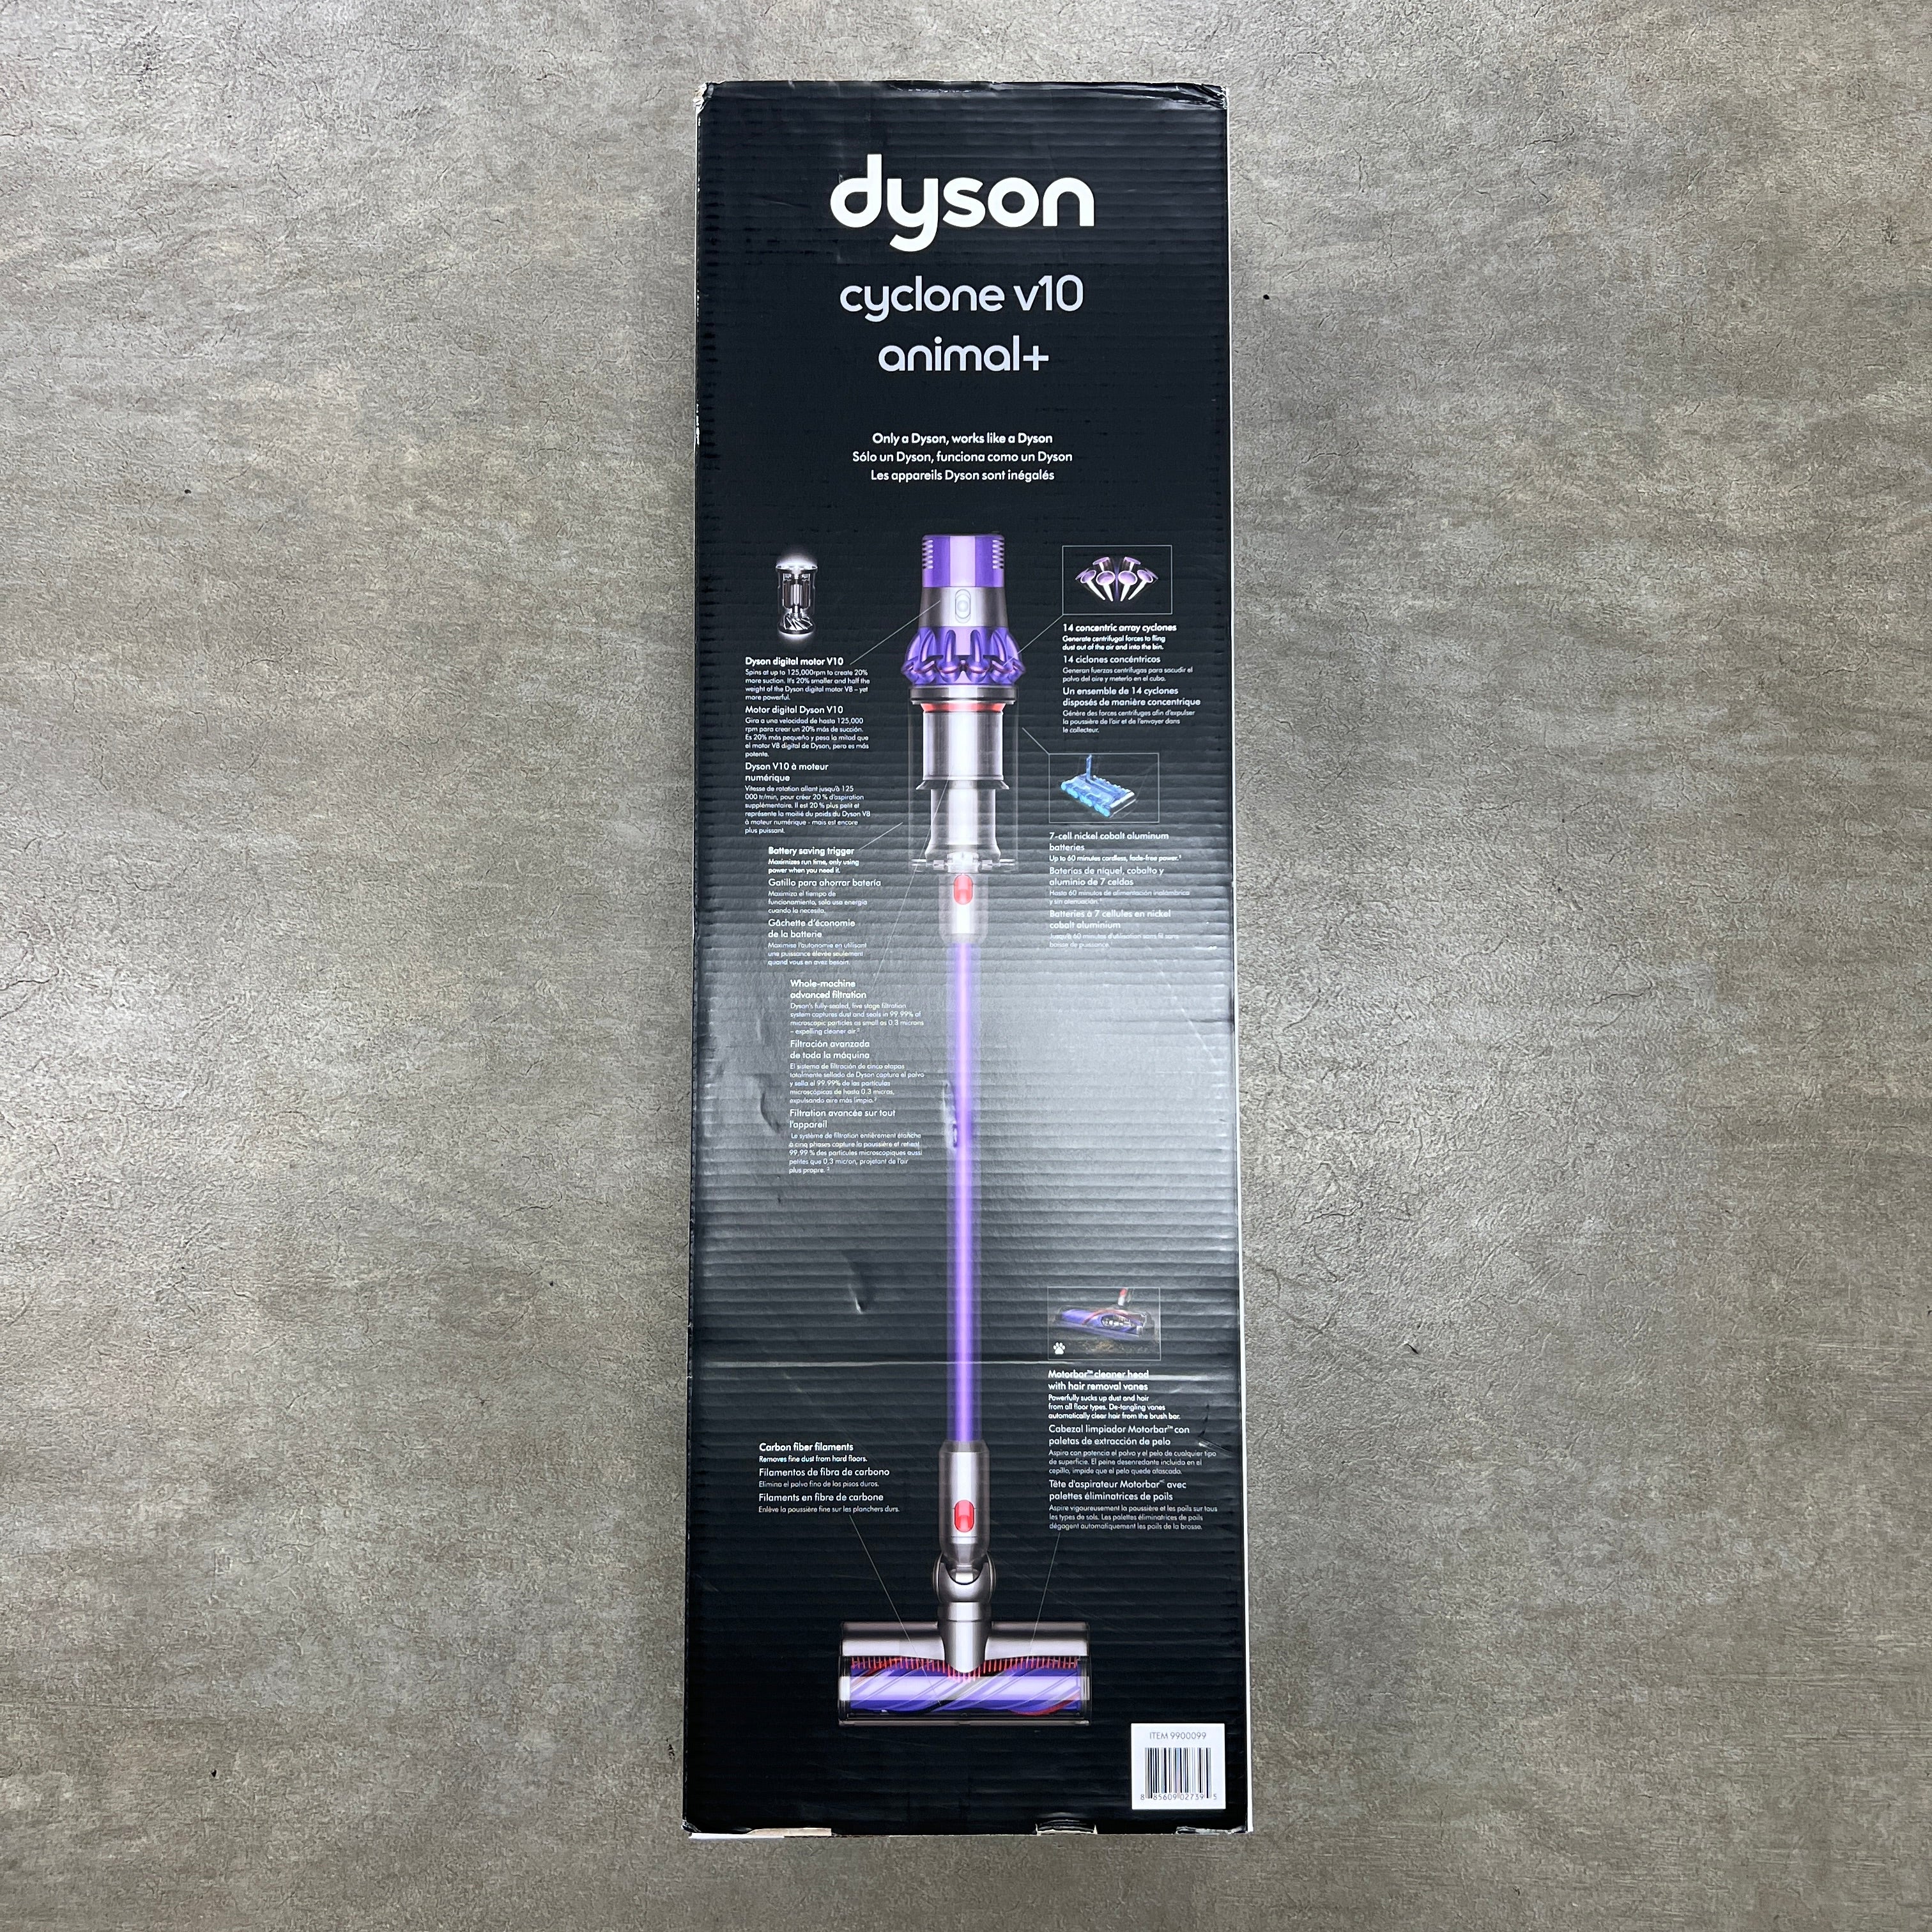 Dyson Vacuum "CYCLONE V10 ANIMAL+" New